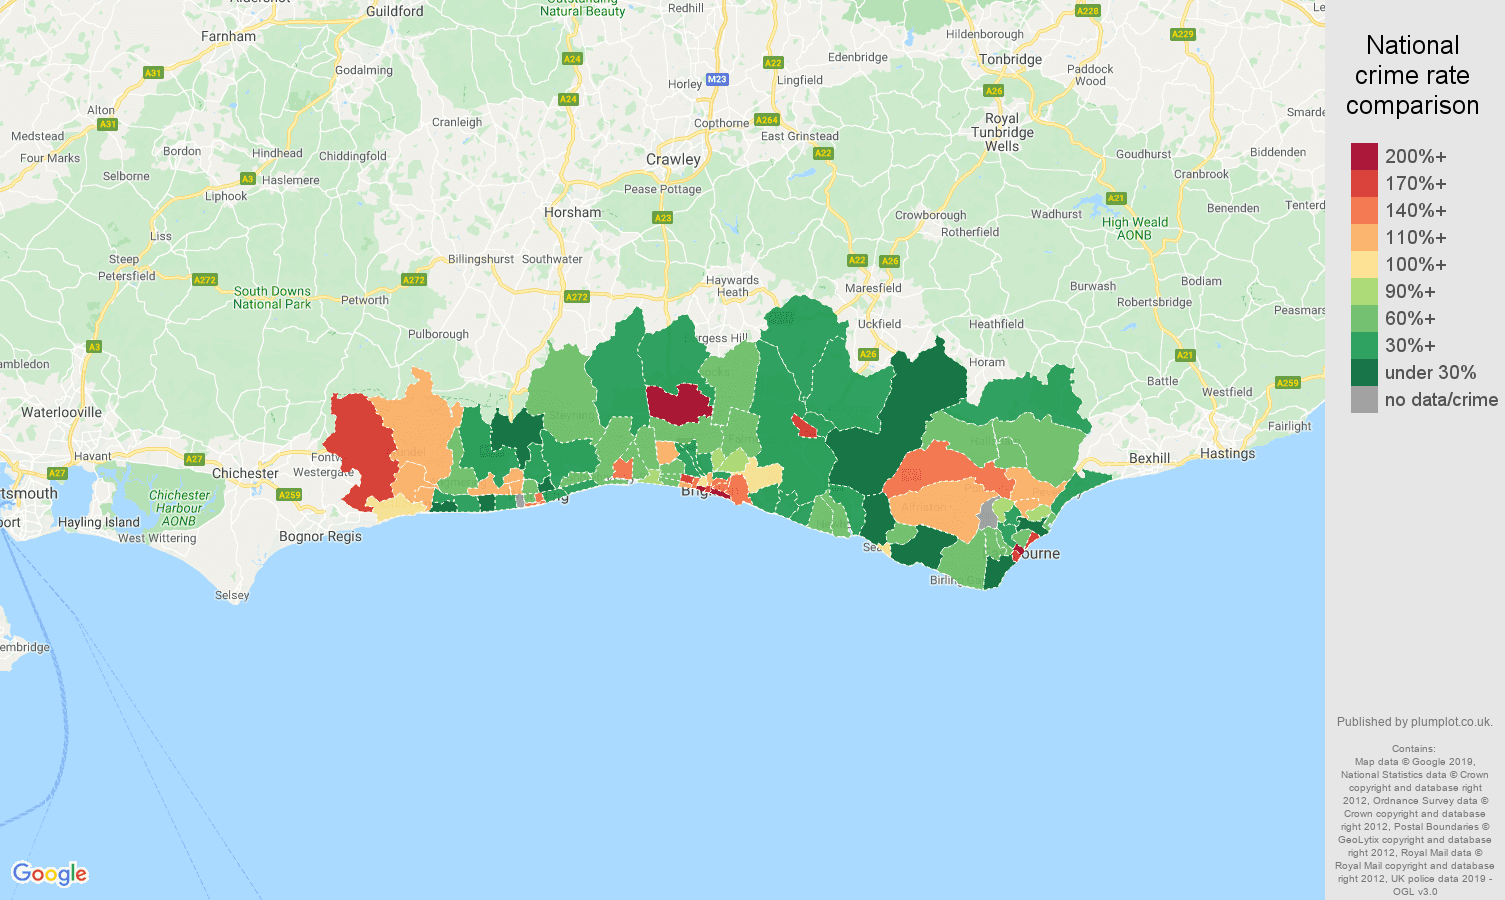 Brighton other crime rate comparison map